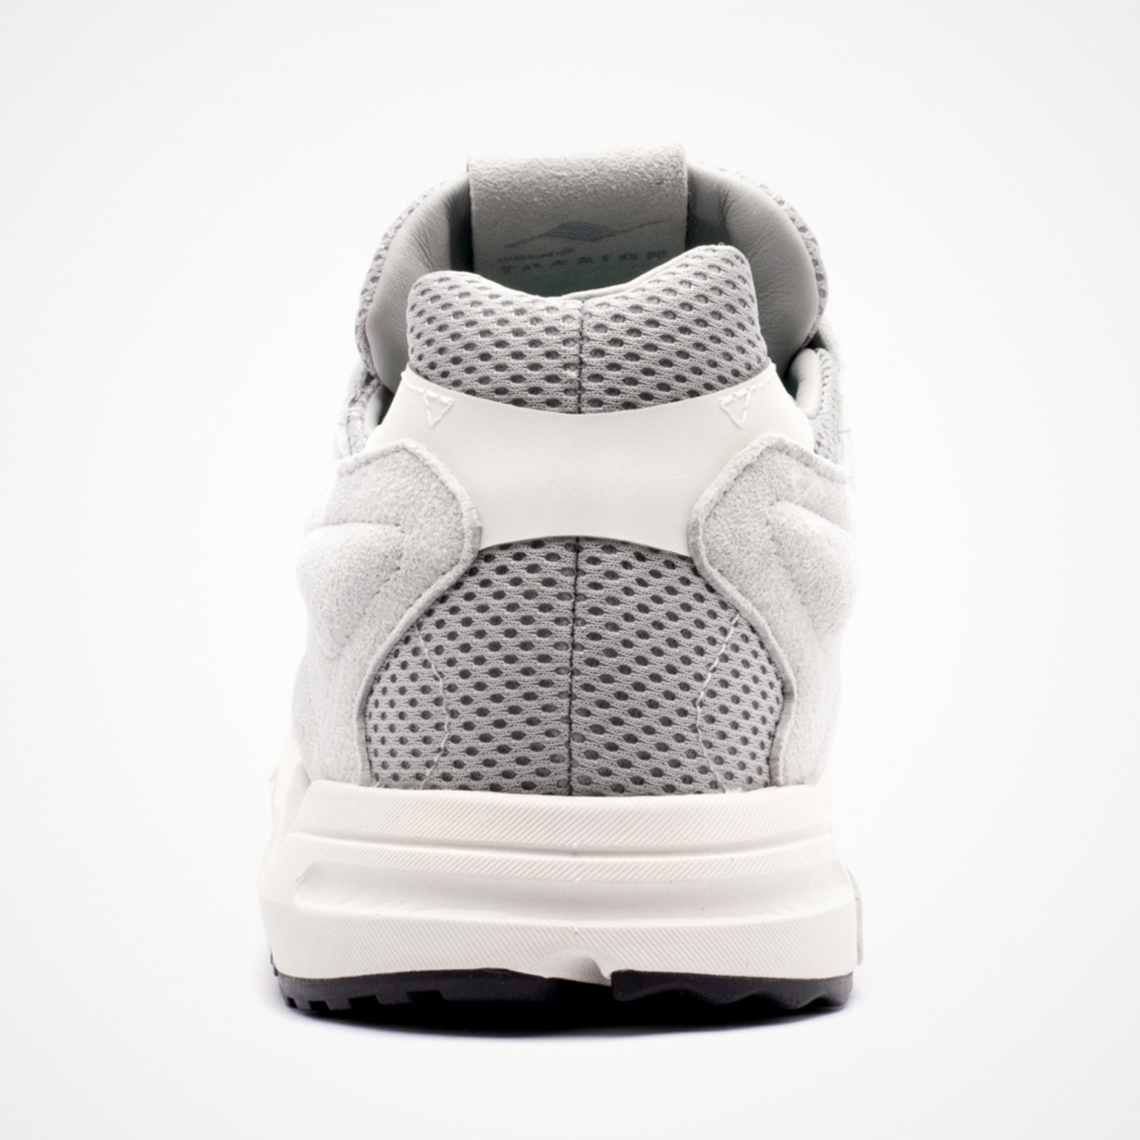 adidas zx torsion grey white ee4809 7